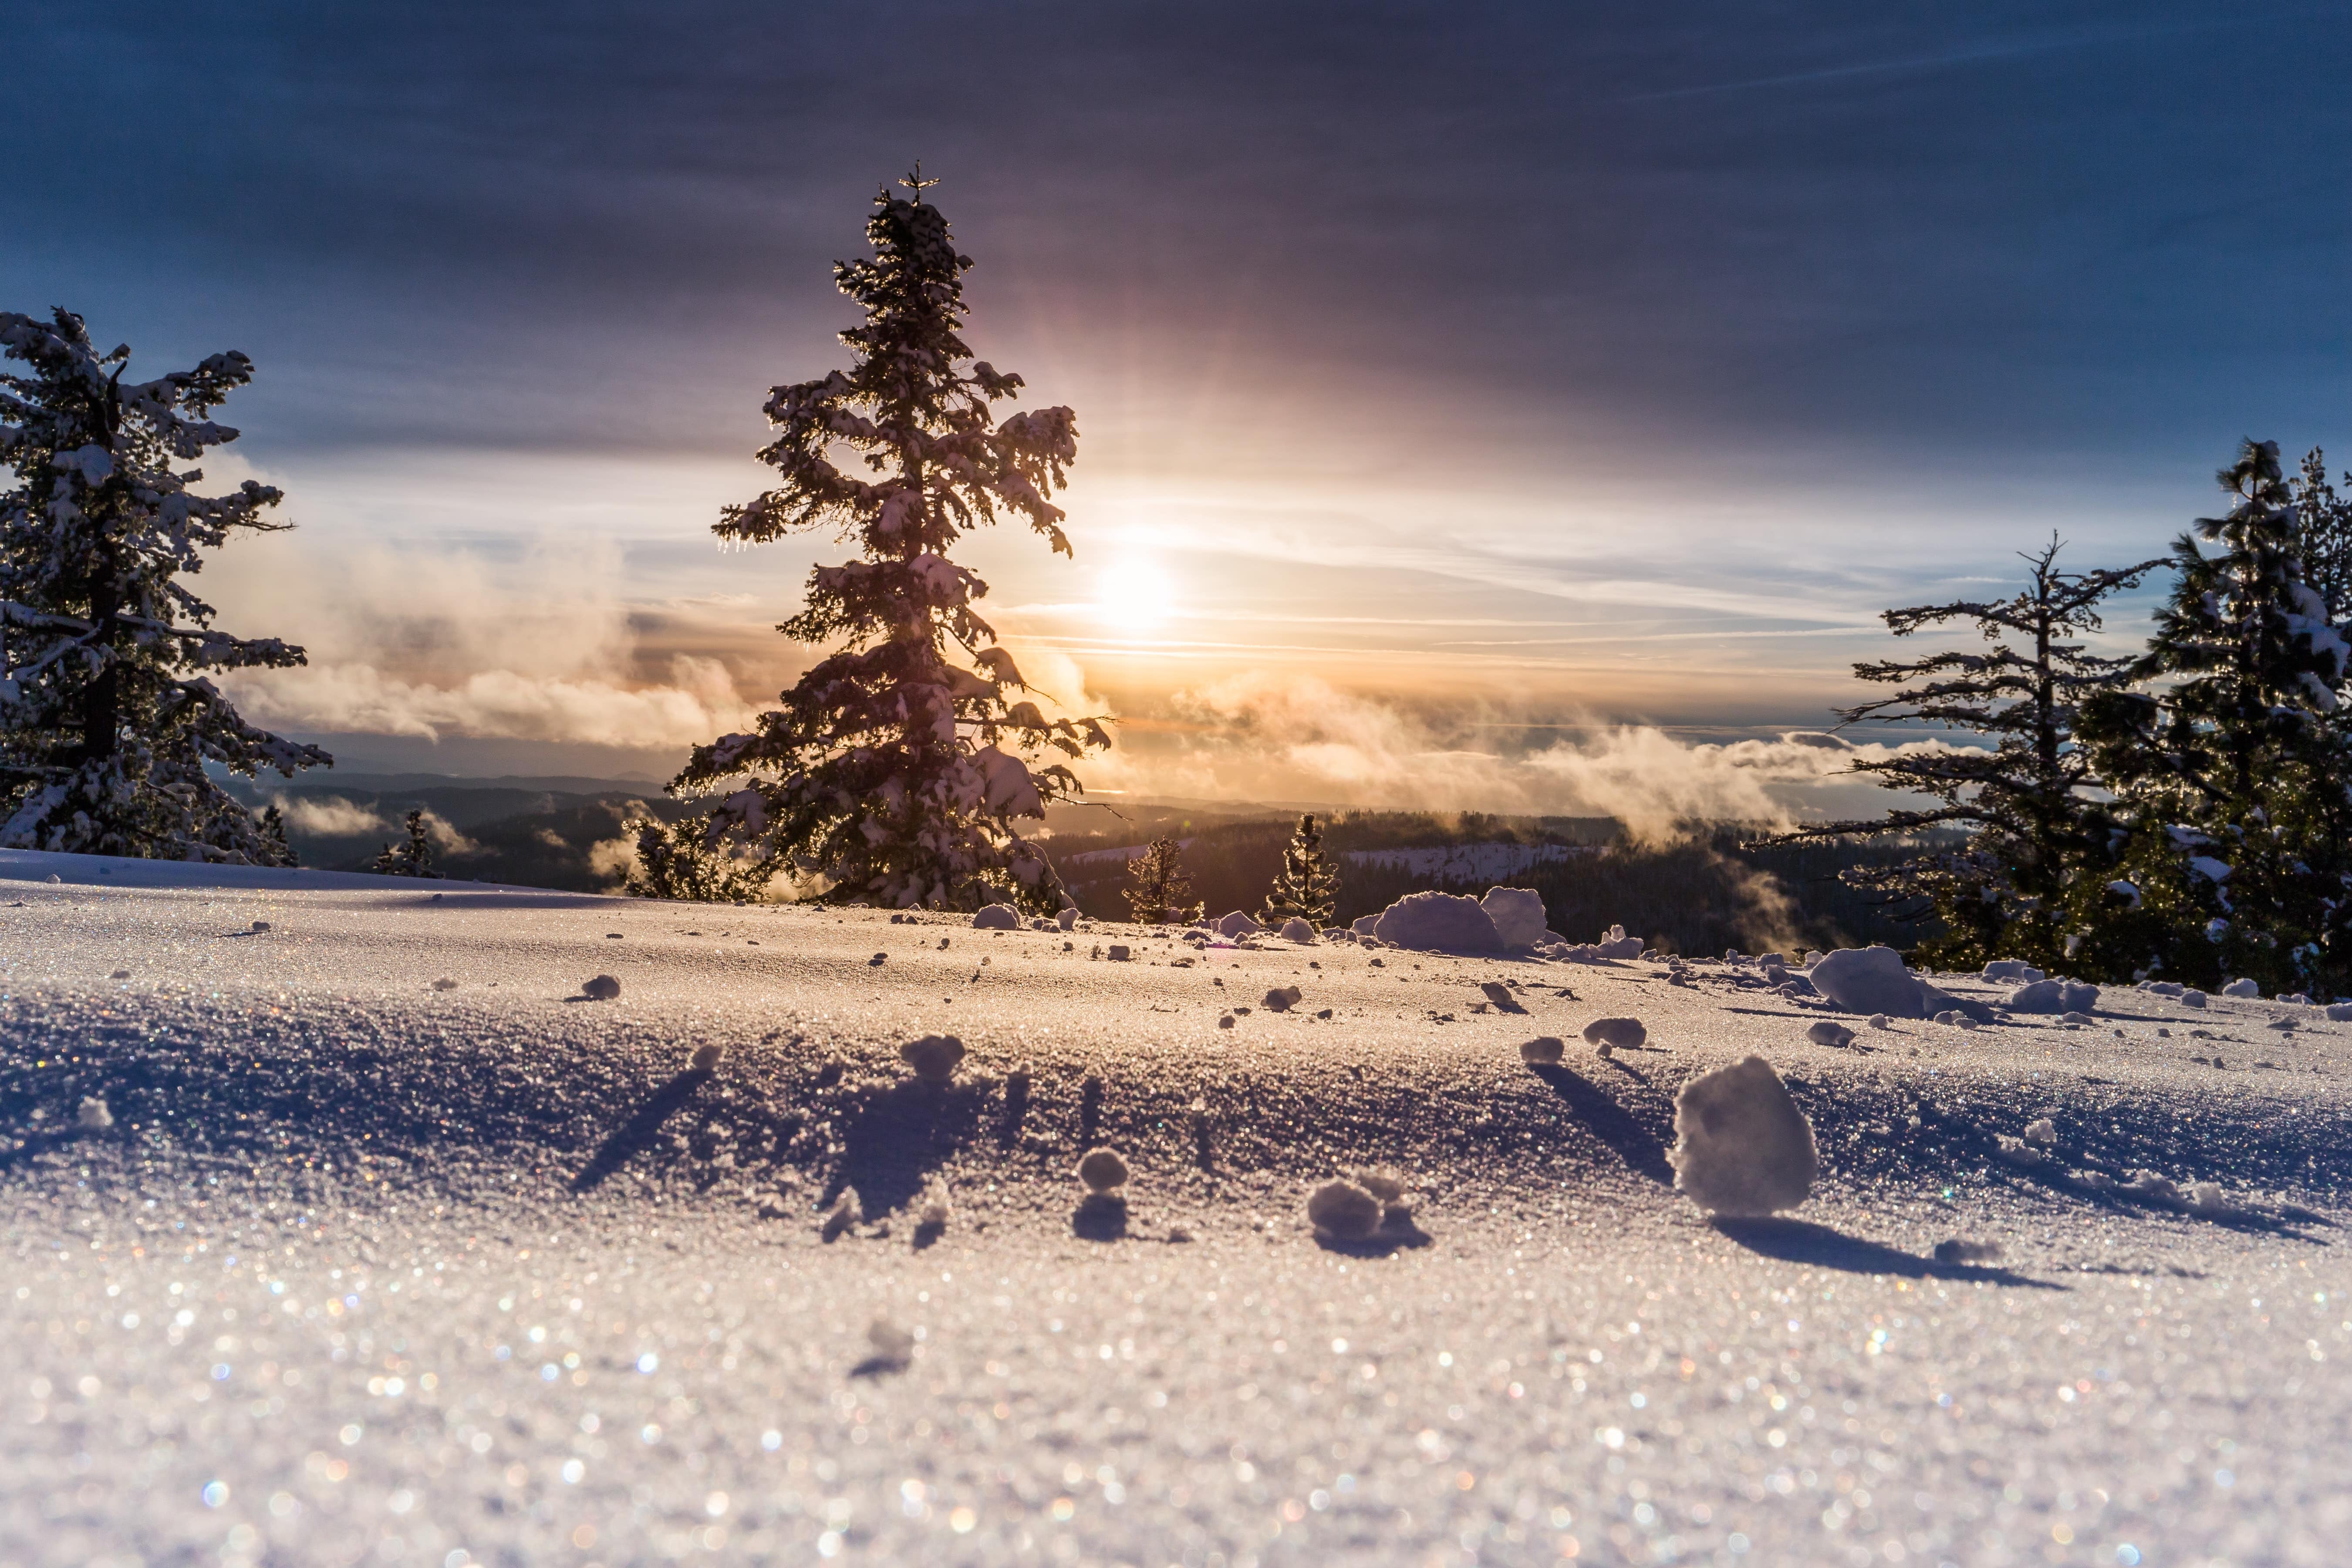 Stock image - Skiiing in Kirkwood, USA - Sunset/sunrise on a snowy mountain - Photo by Denys Nevozhai